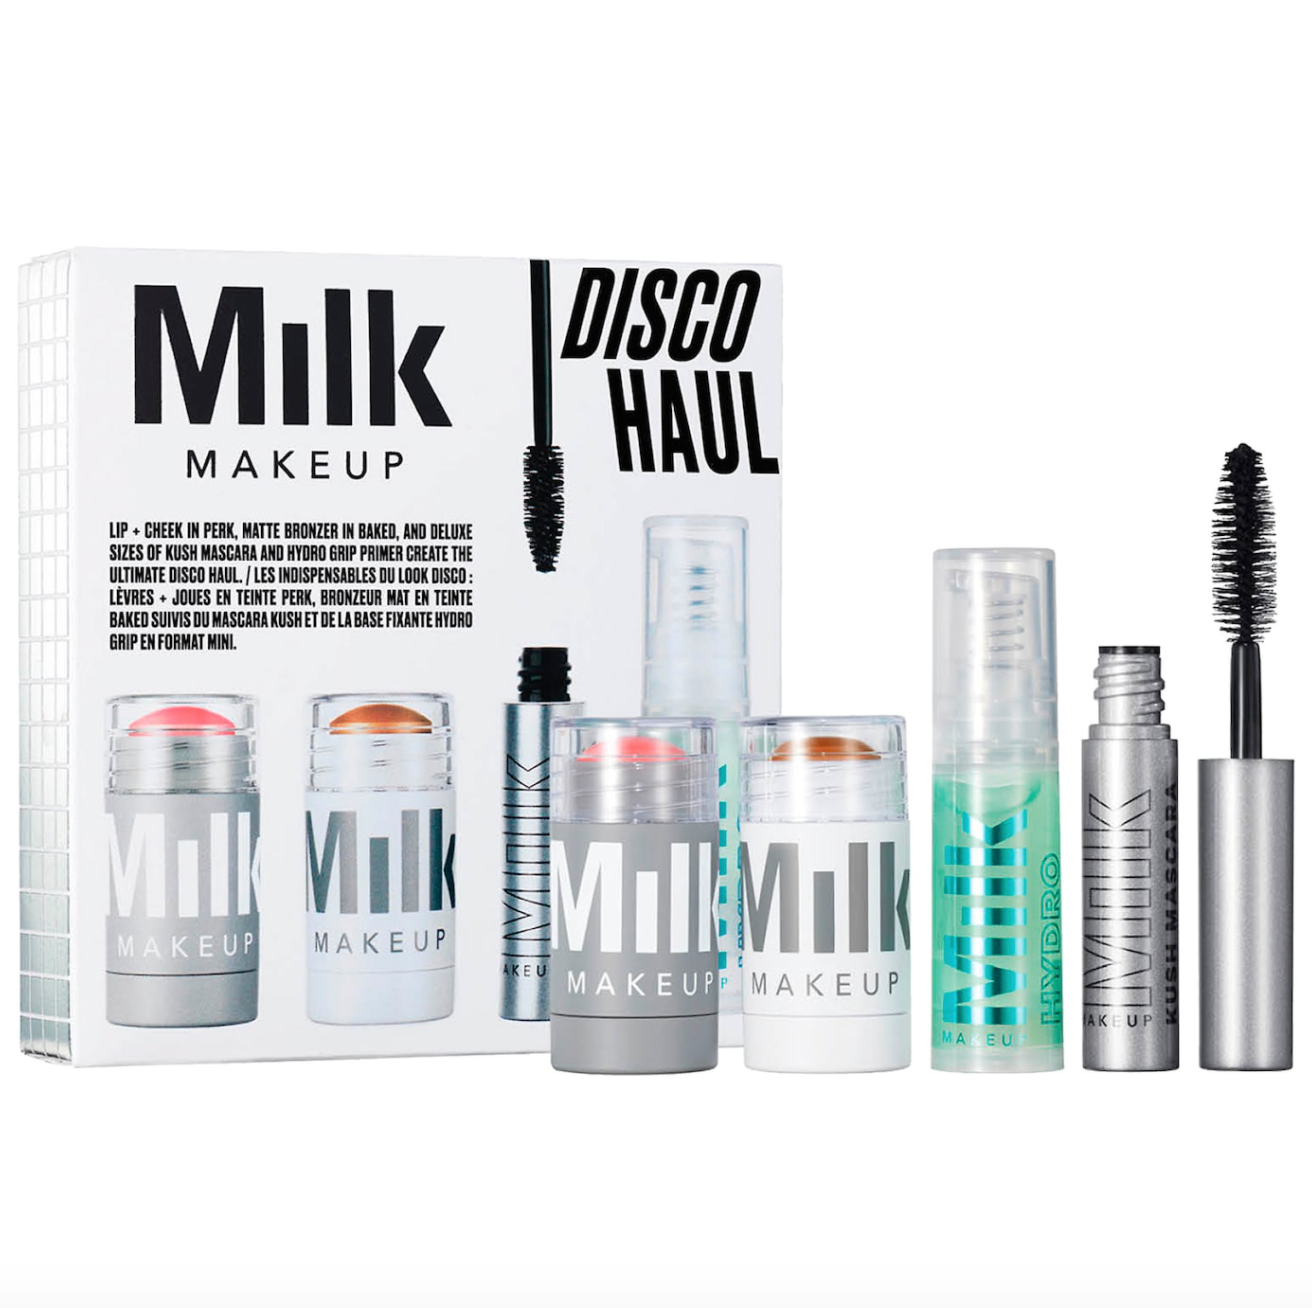 Milk Makeup + Disco Haul Face Starter Set